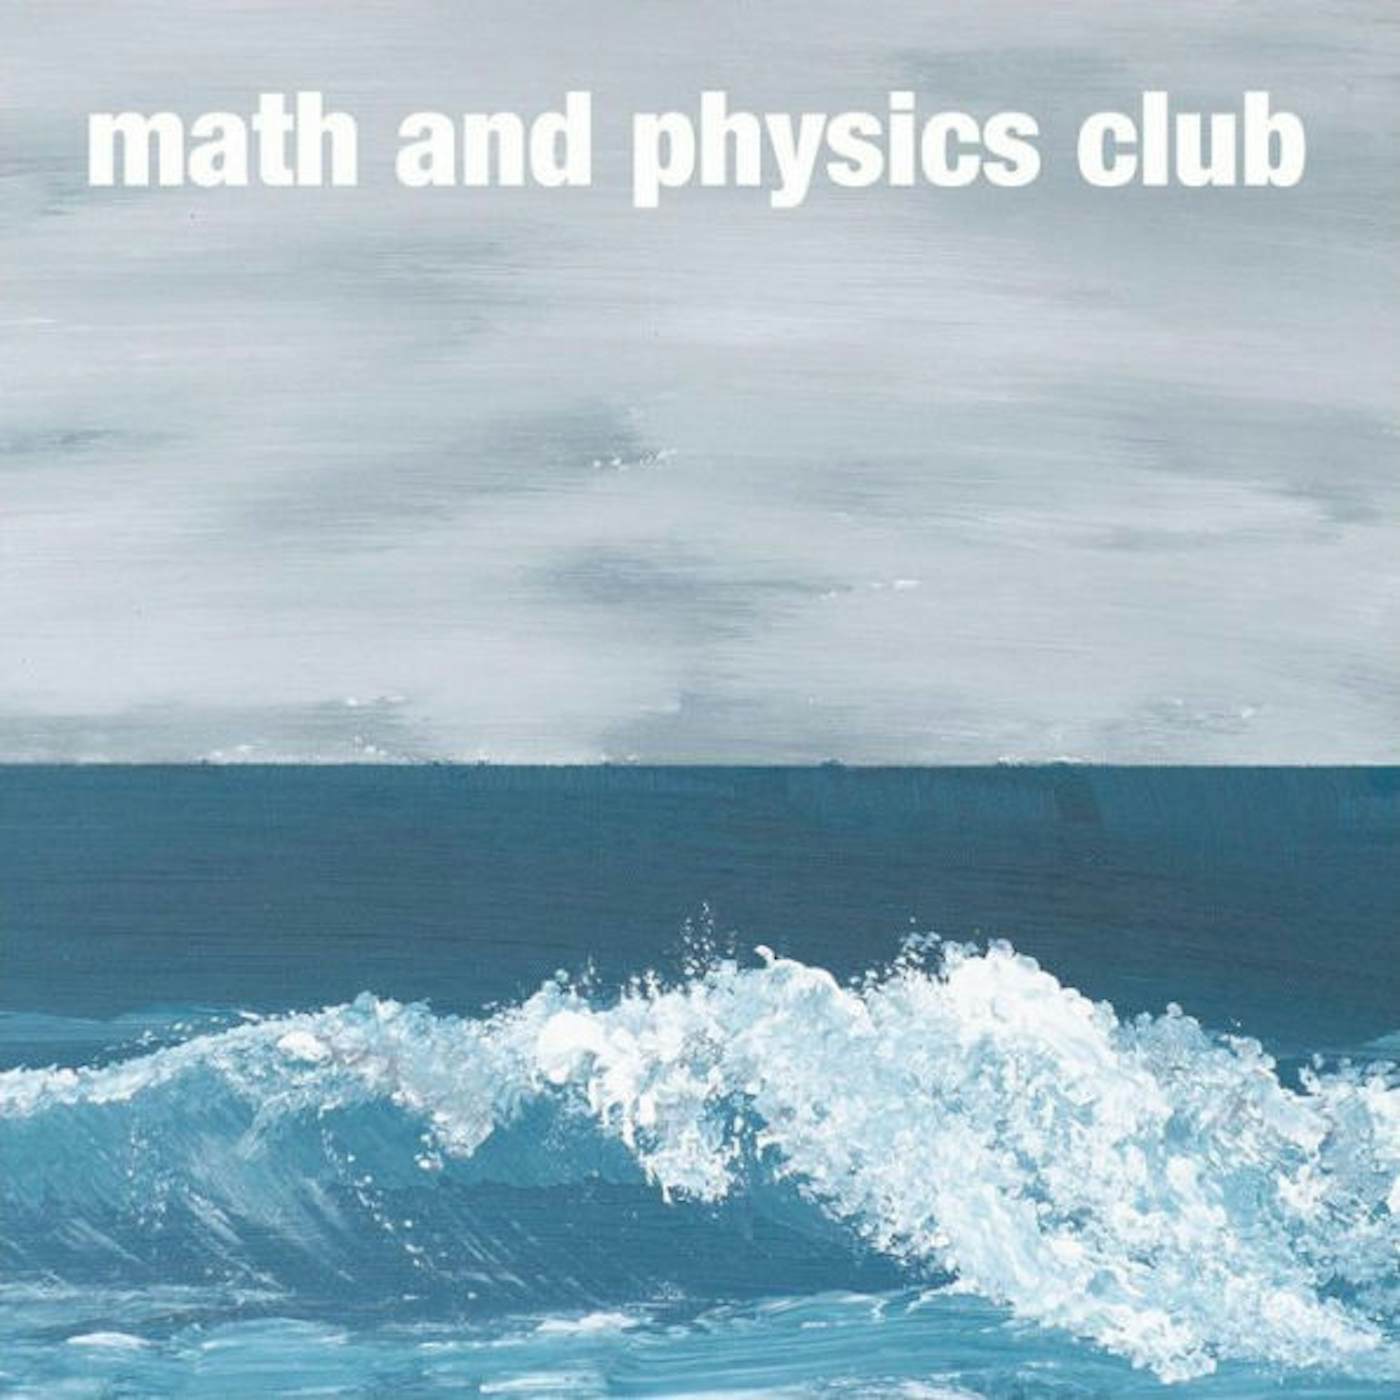 Math and Physics Club Indian Ocean Vinyl Record